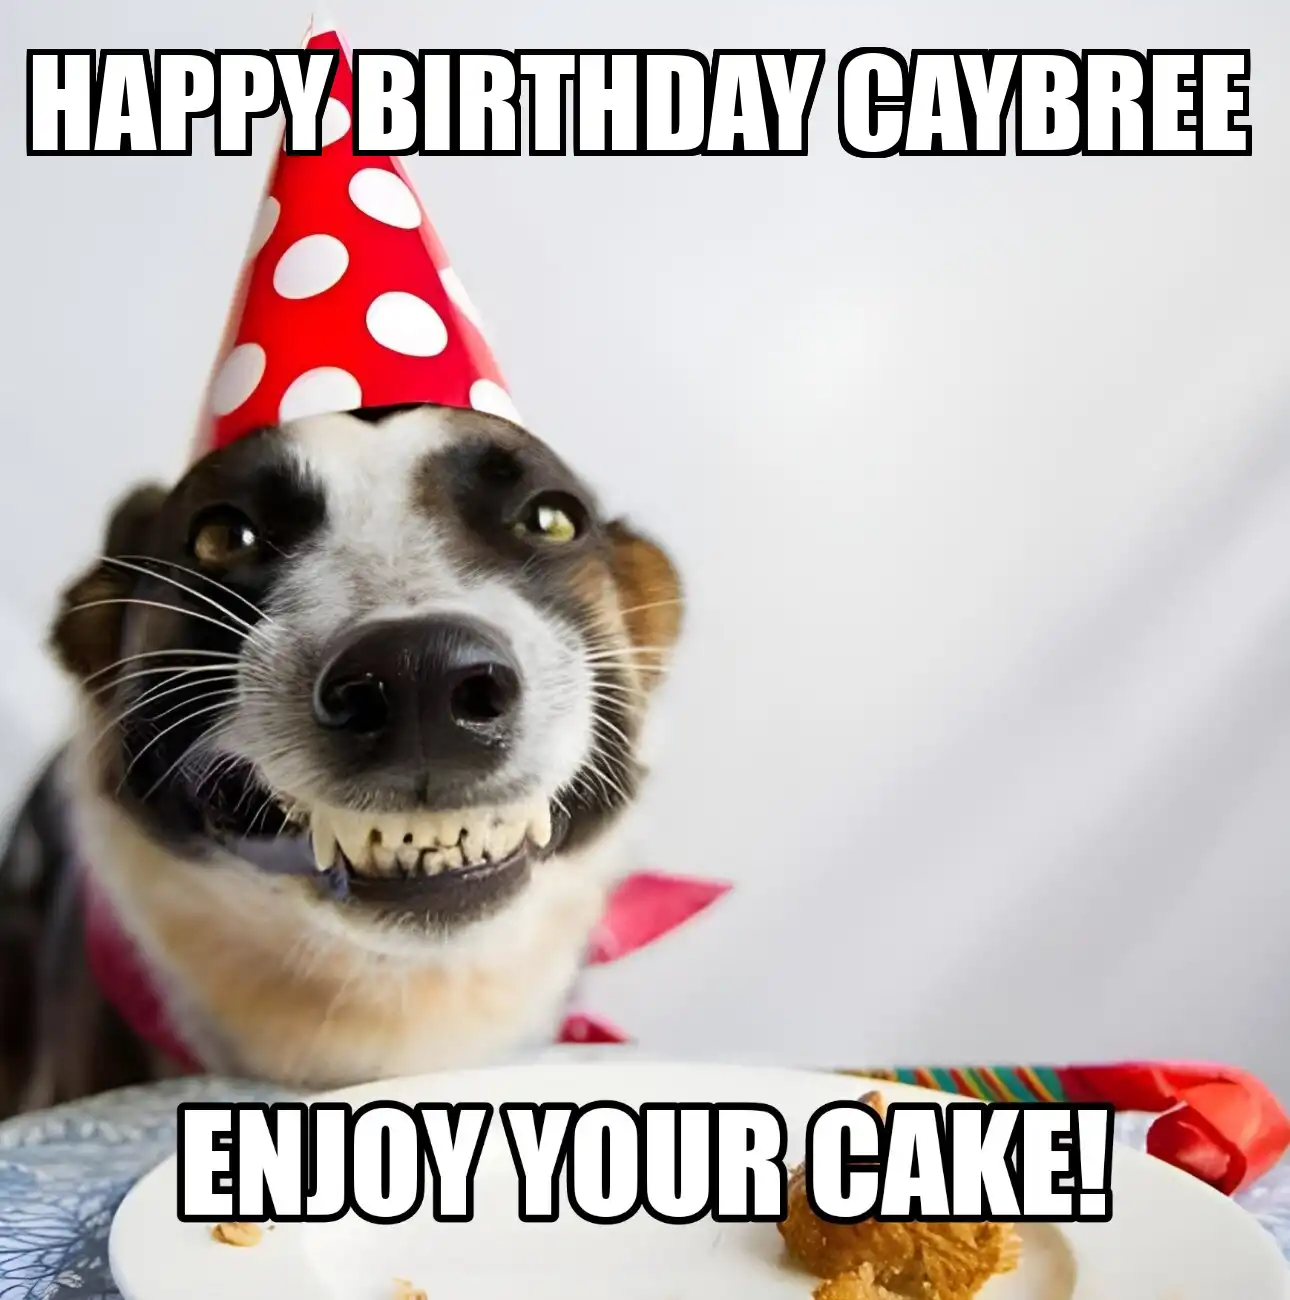 Happy Birthday Caybree Enjoy Your Cake Dog Meme